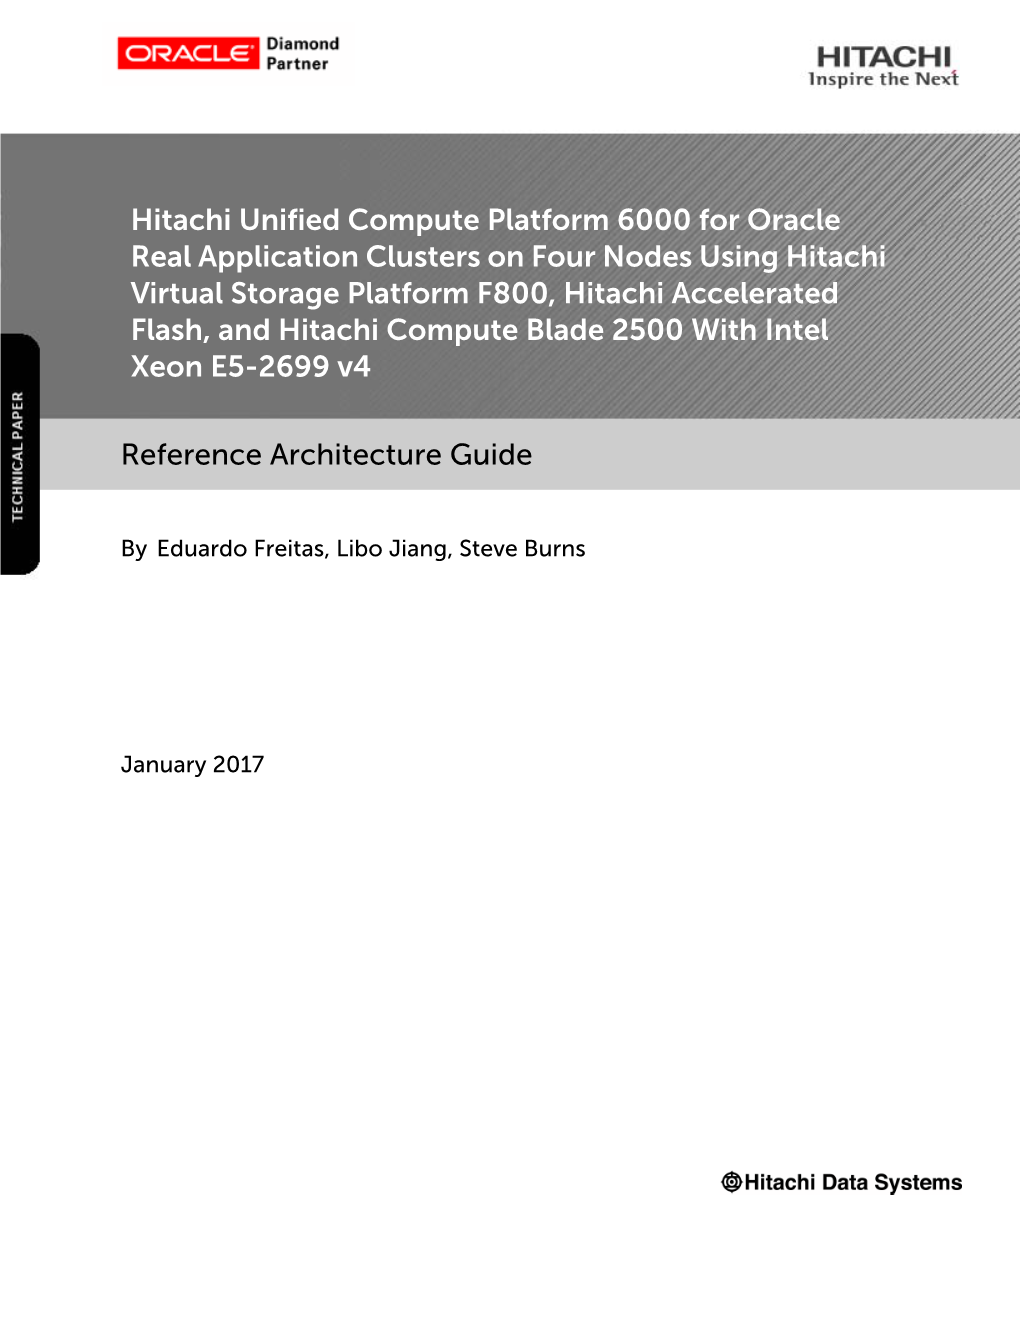 Hitachi UCP 6000 for Oracle RAC on Four Nodes Using VSP F800, HAF